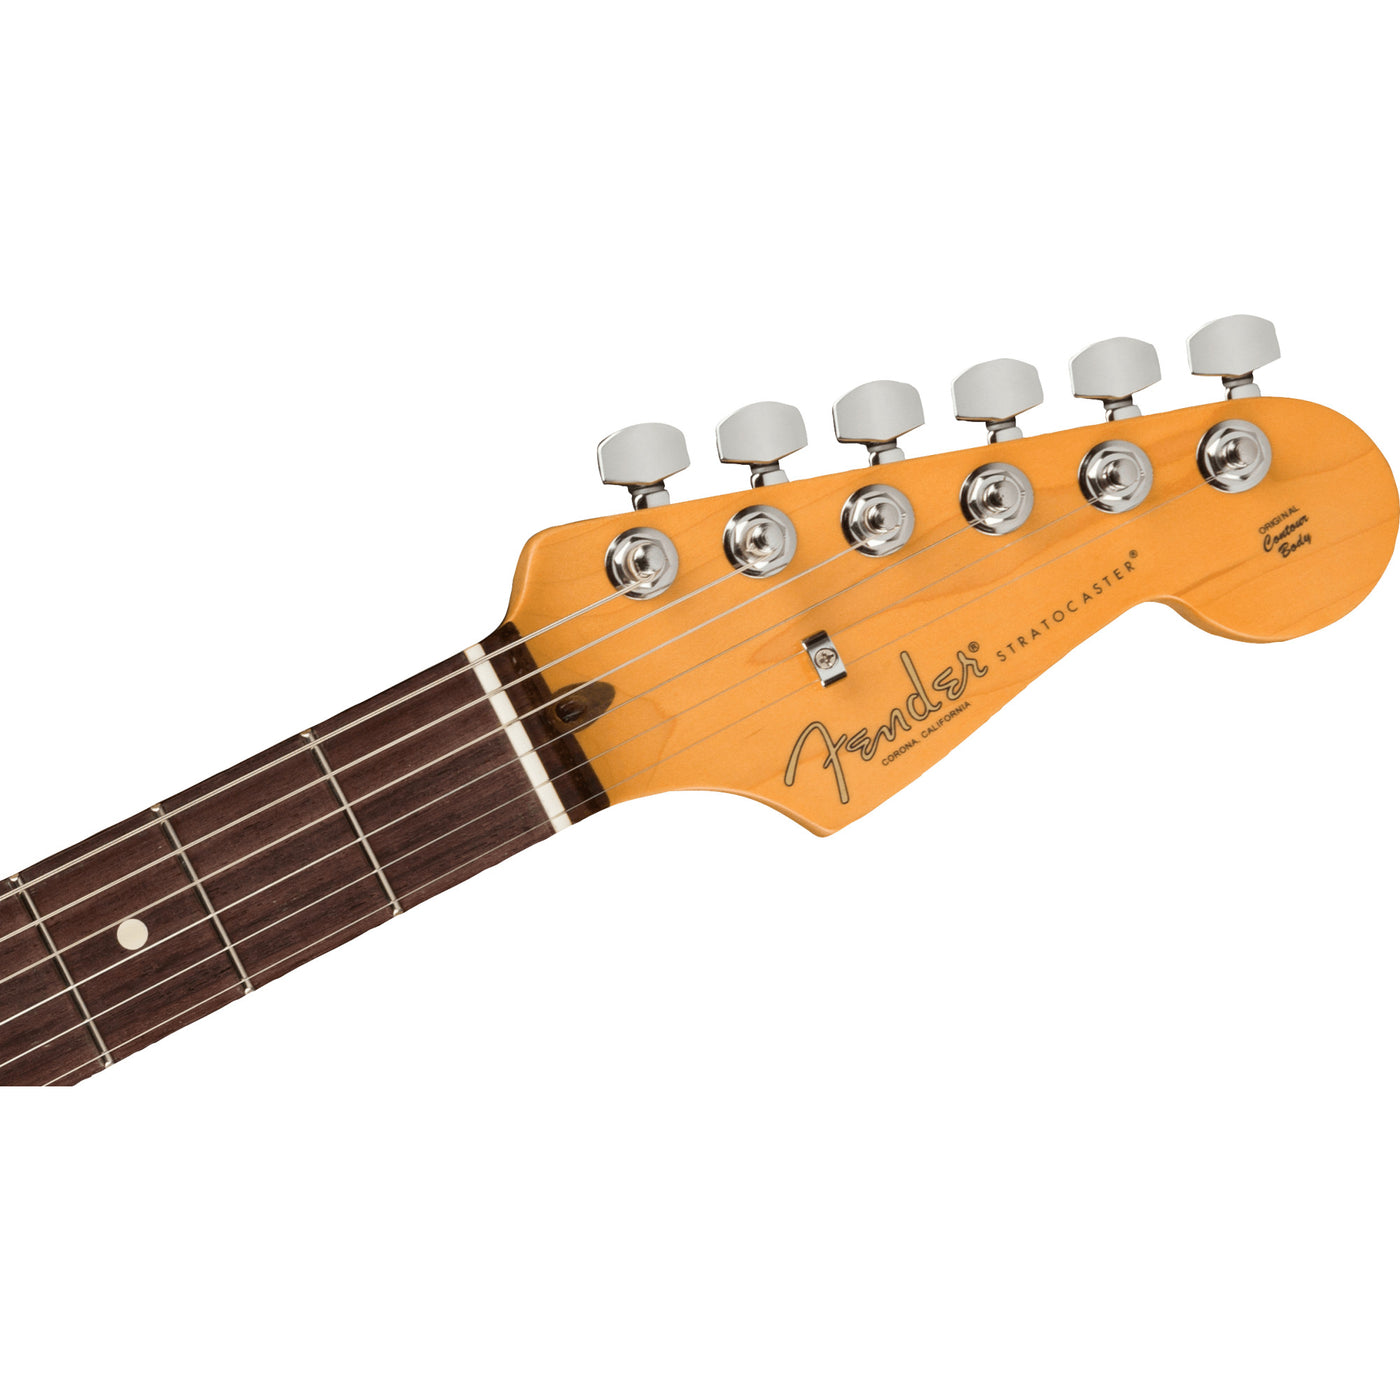 Fender American Professional ll Stratocaster Electric Guitar, Mercury (0113900755)